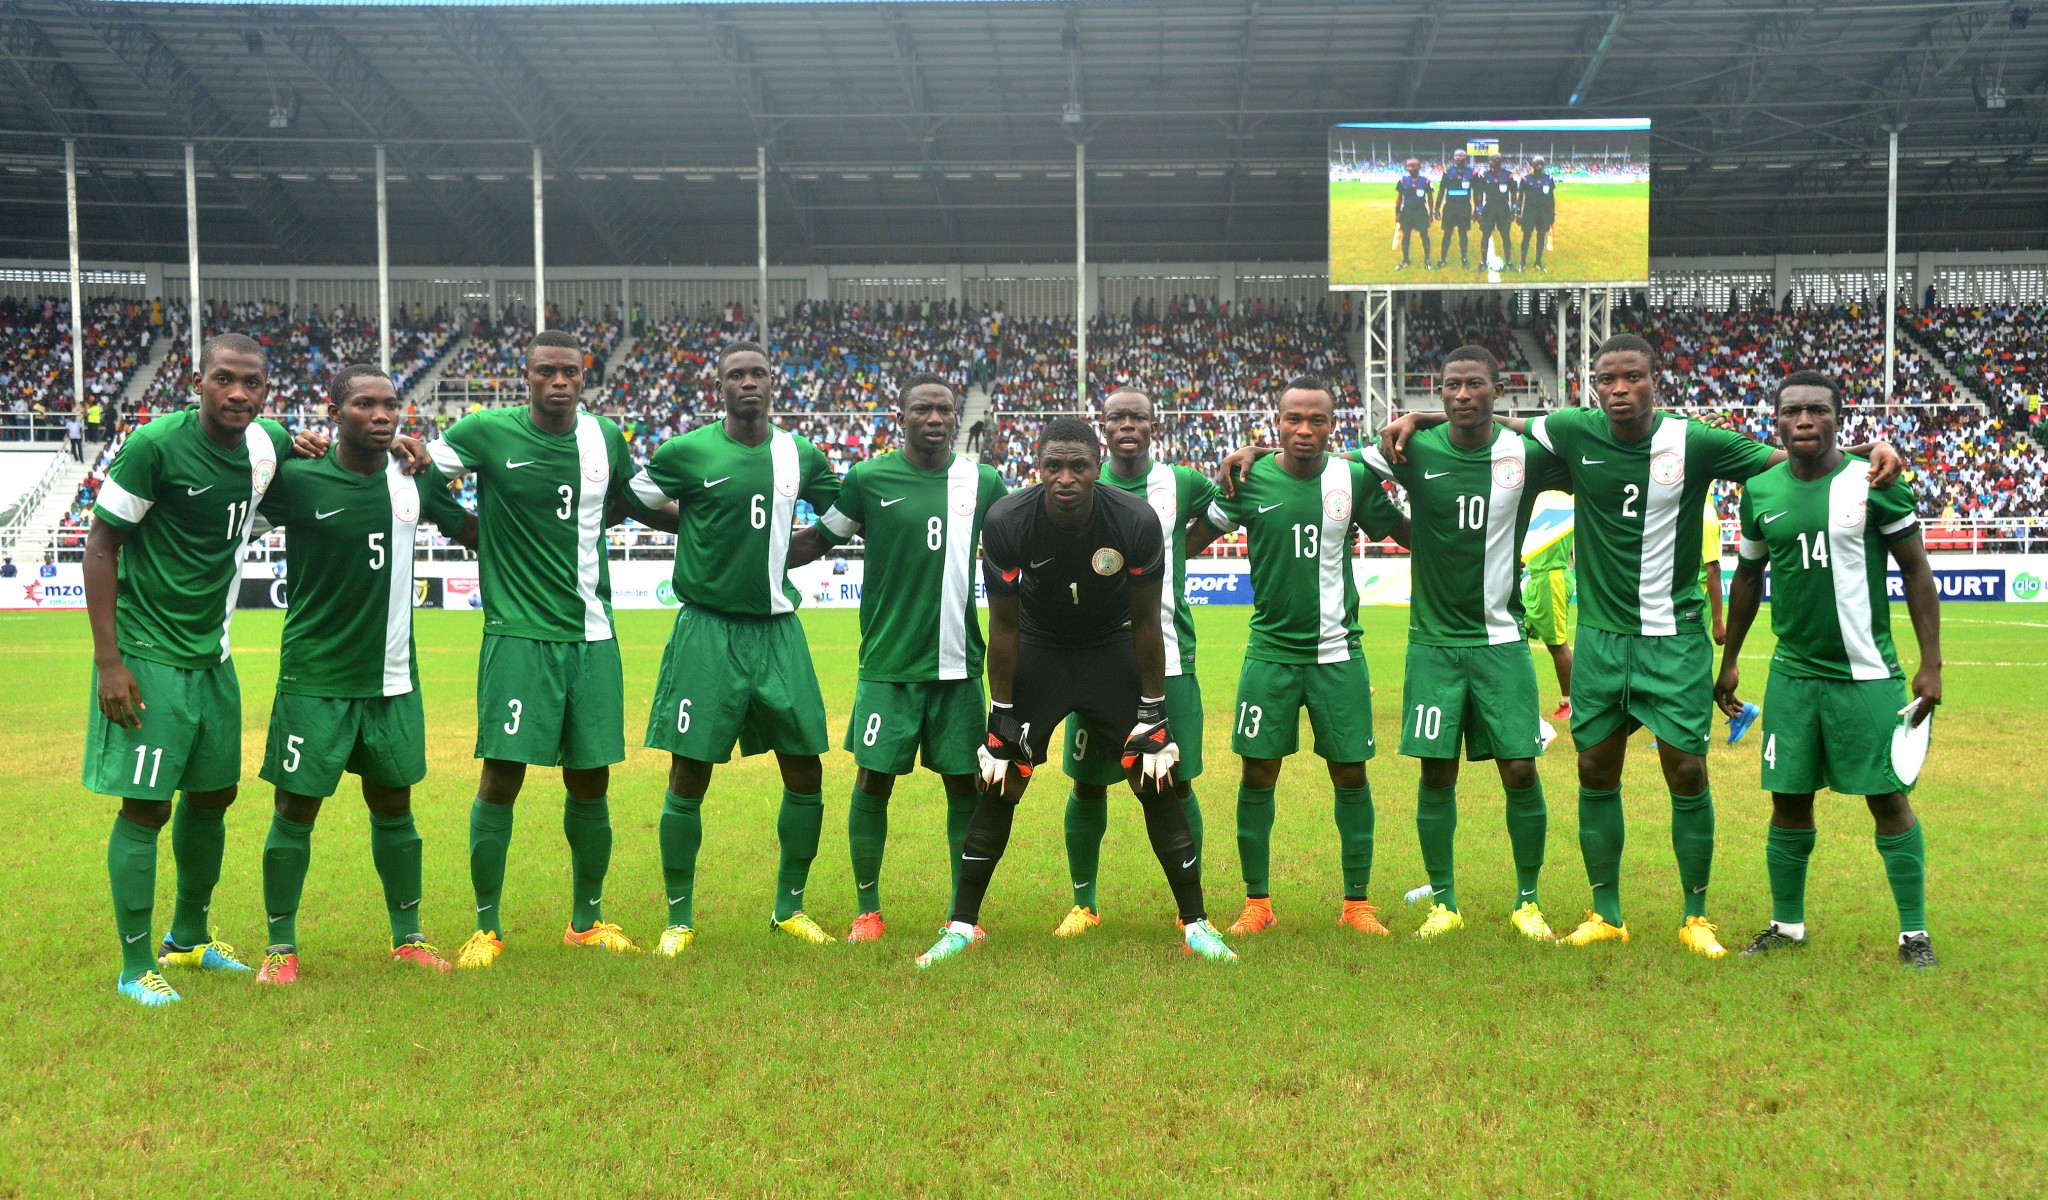 Nigeria U23 beat host Brazil 1-0 in friendly